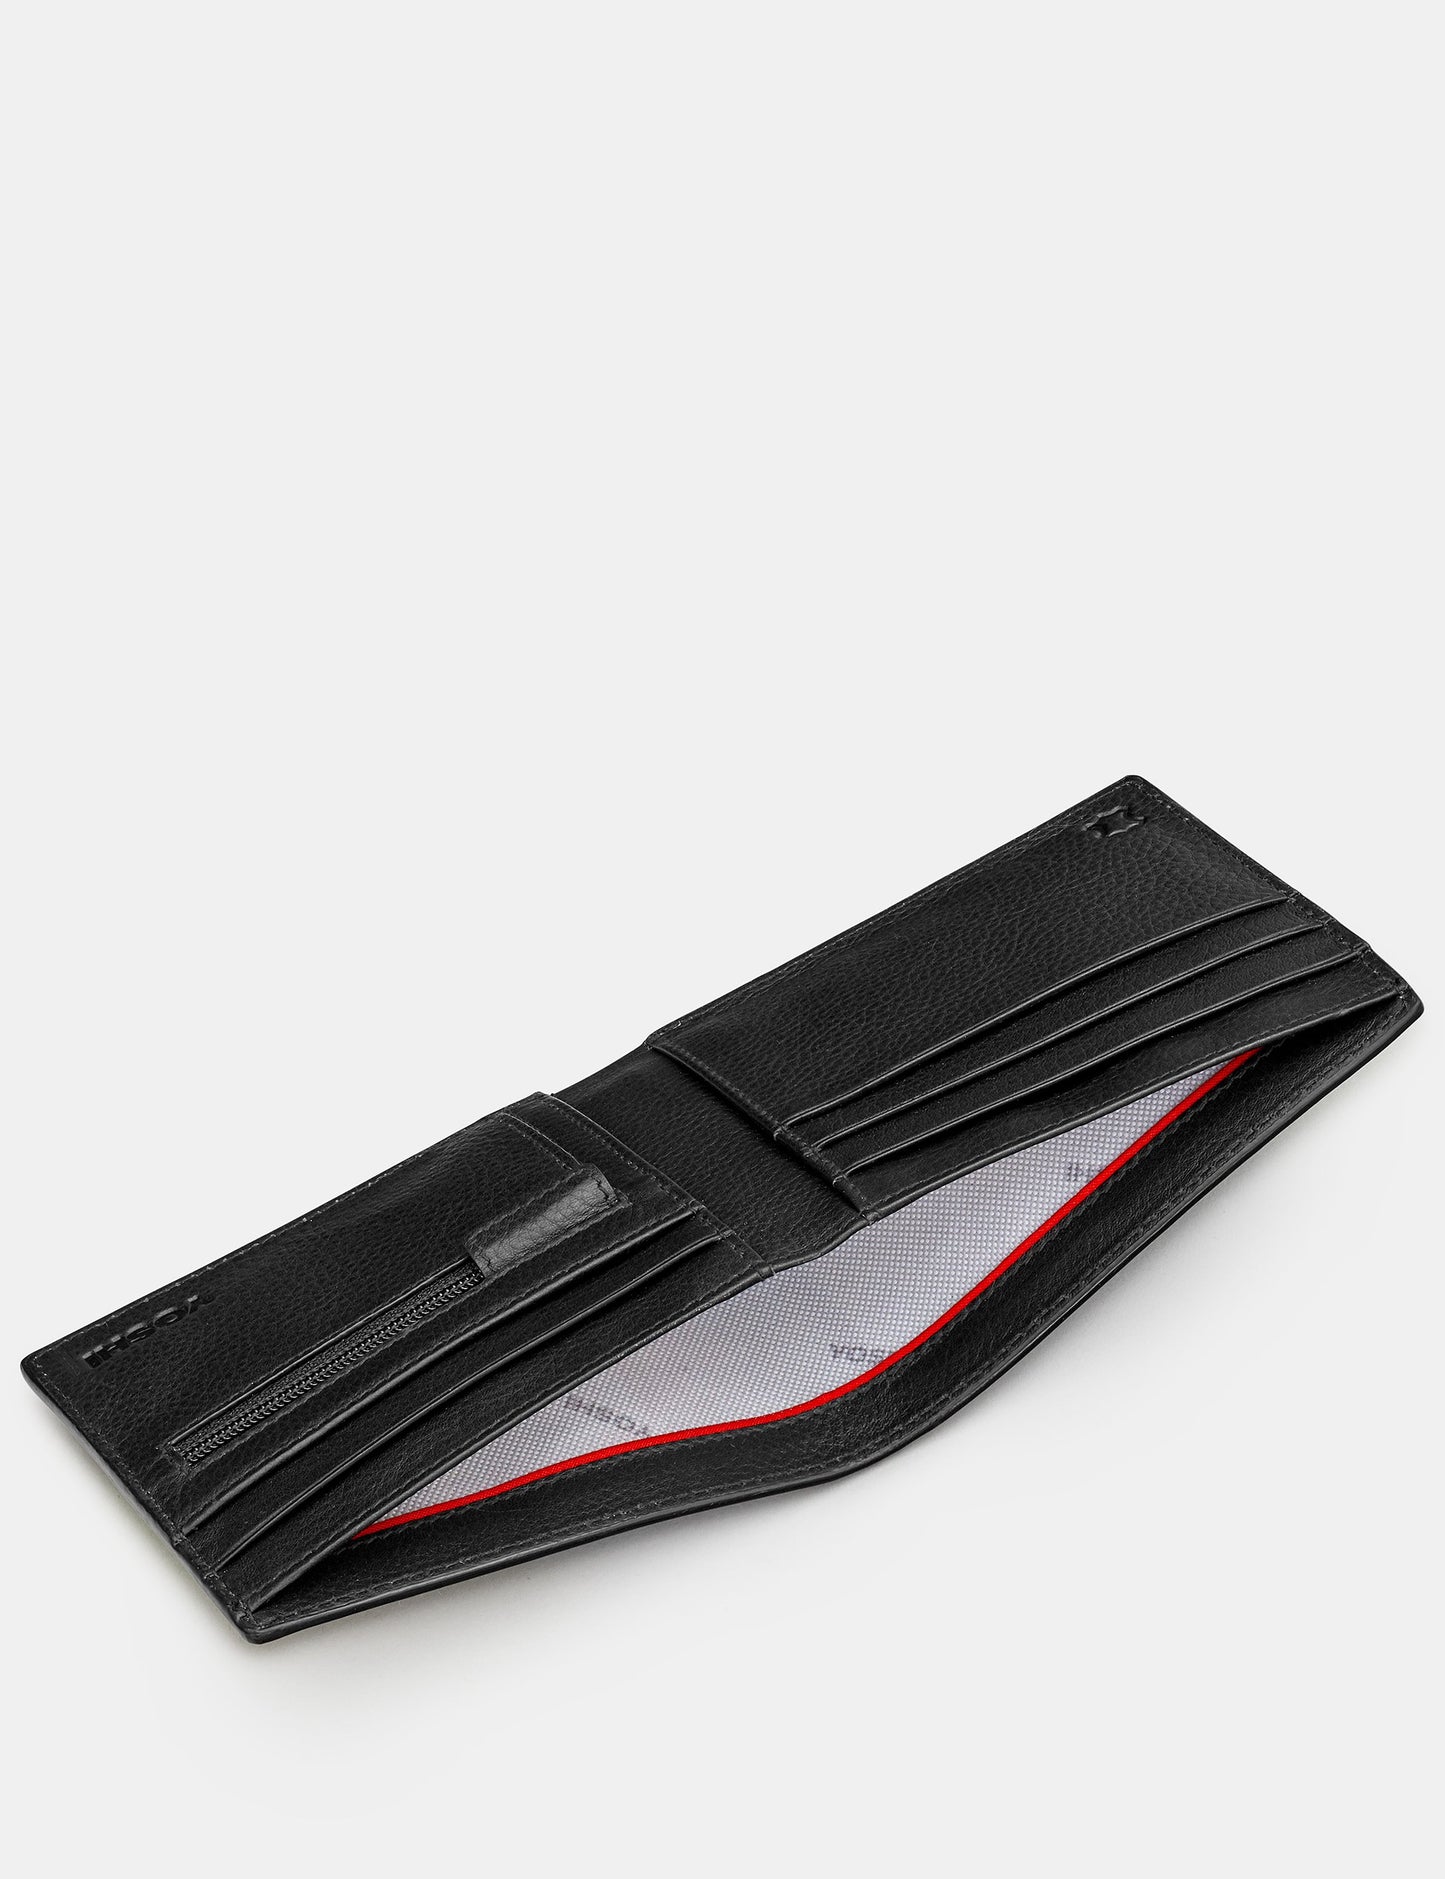 Yoshi Sci-Fi Bookworm Slim Leather Wallet